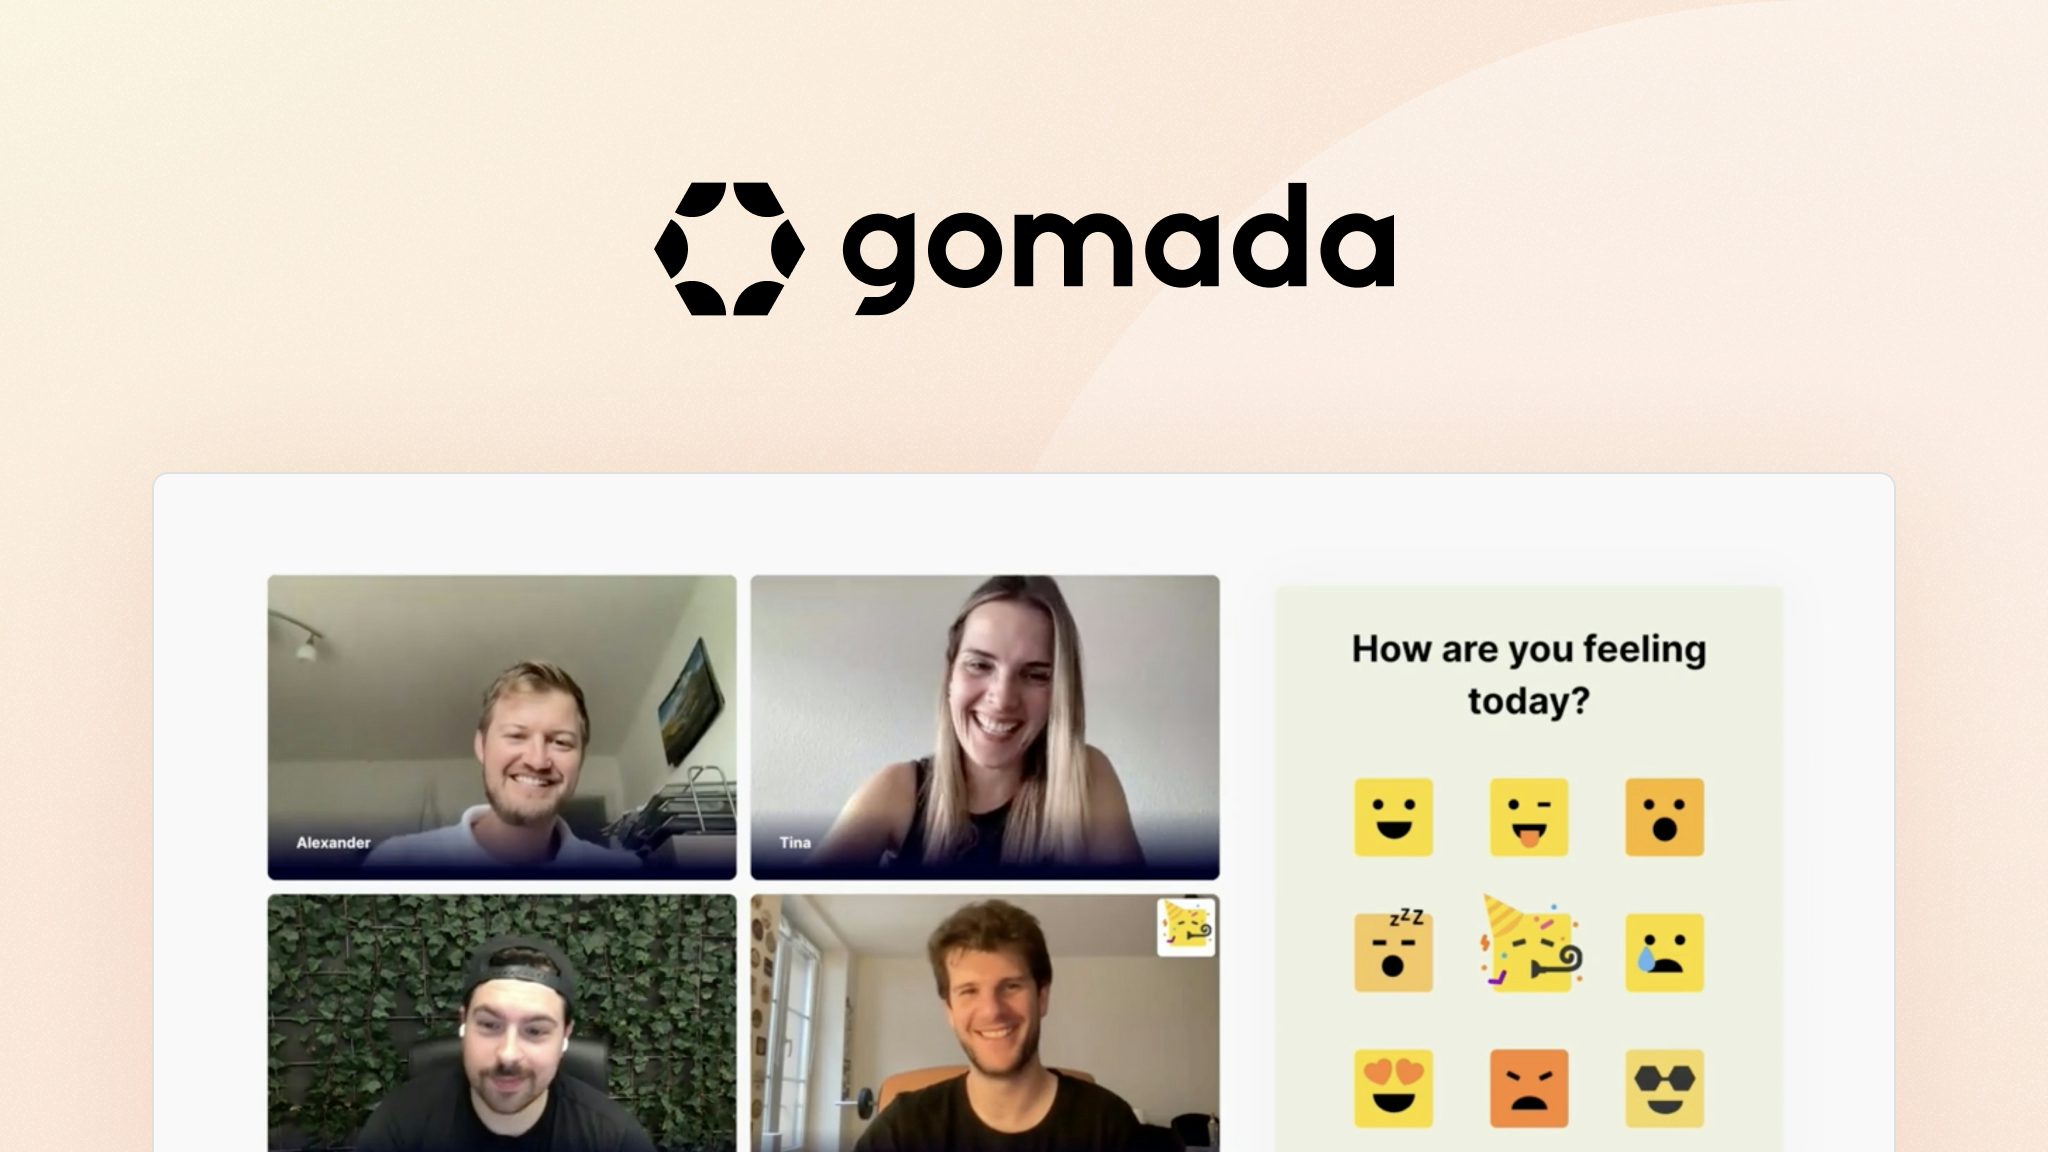 Gomada makes teams feel connected through collaborative experiences